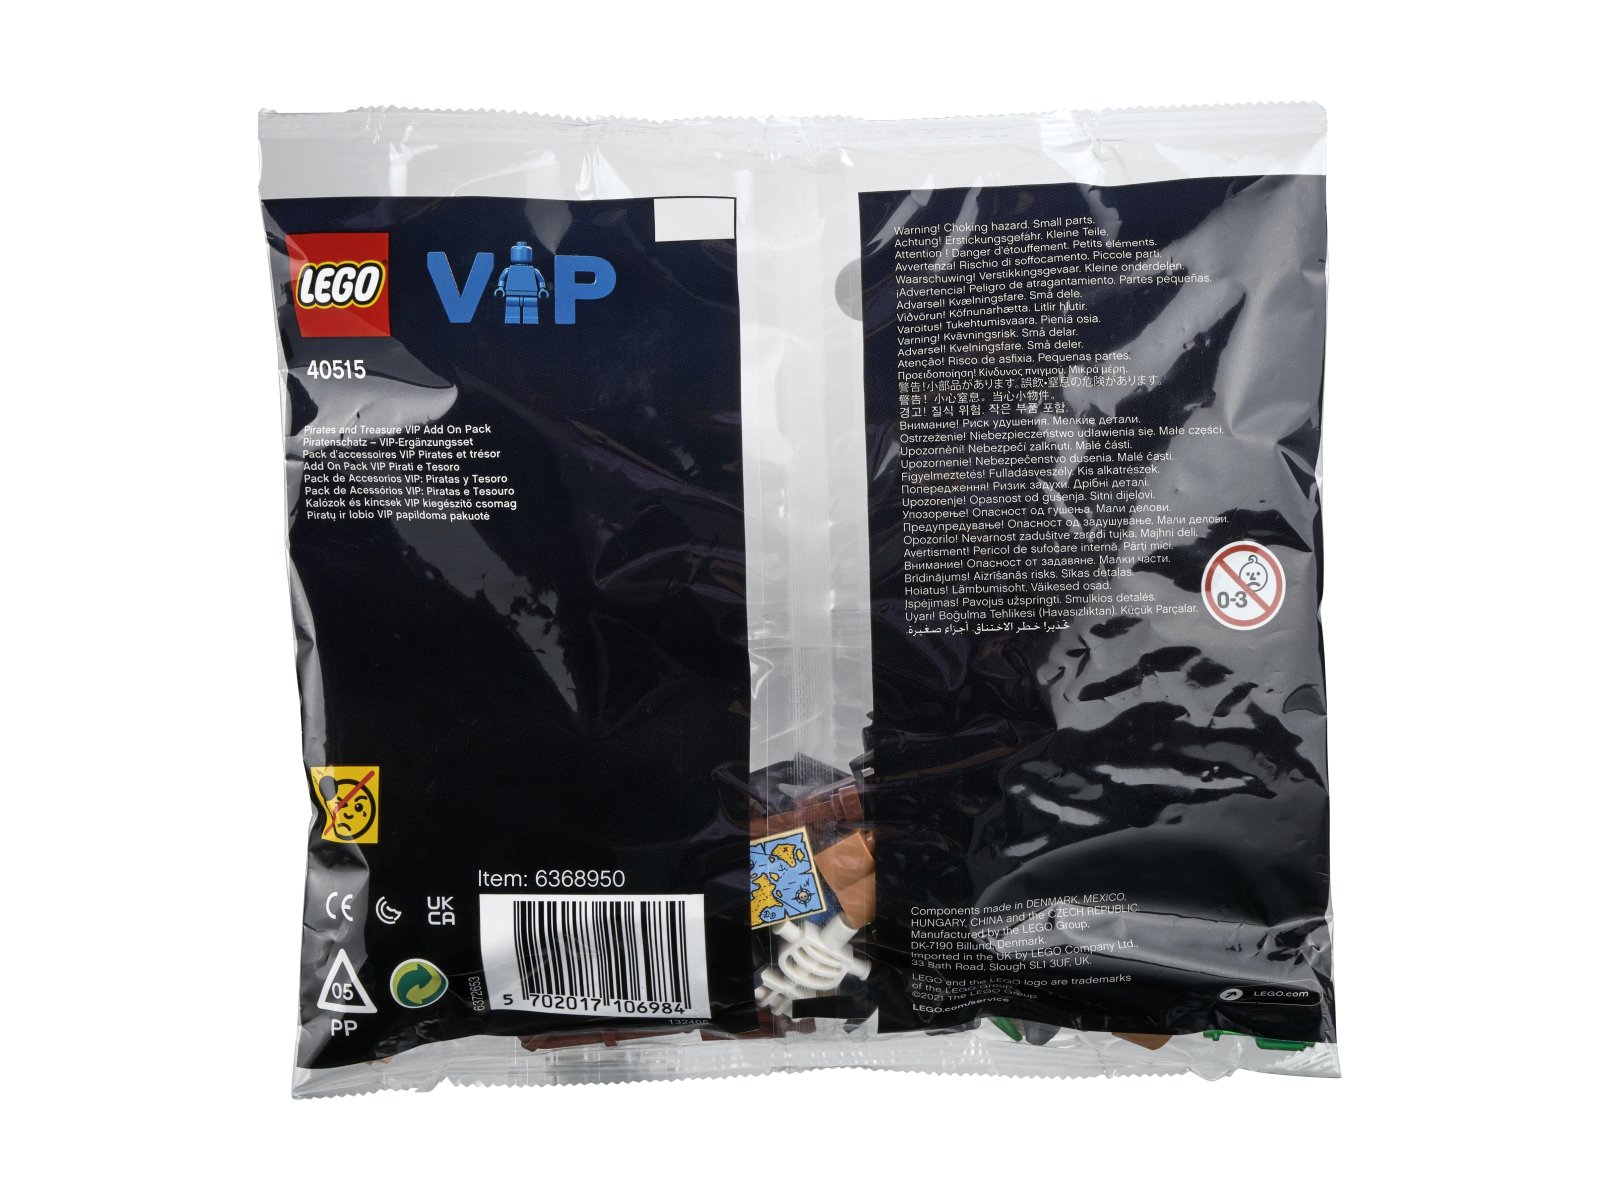 LEGO 40515 Piraci i skarby — zestaw dodatkowy VIP